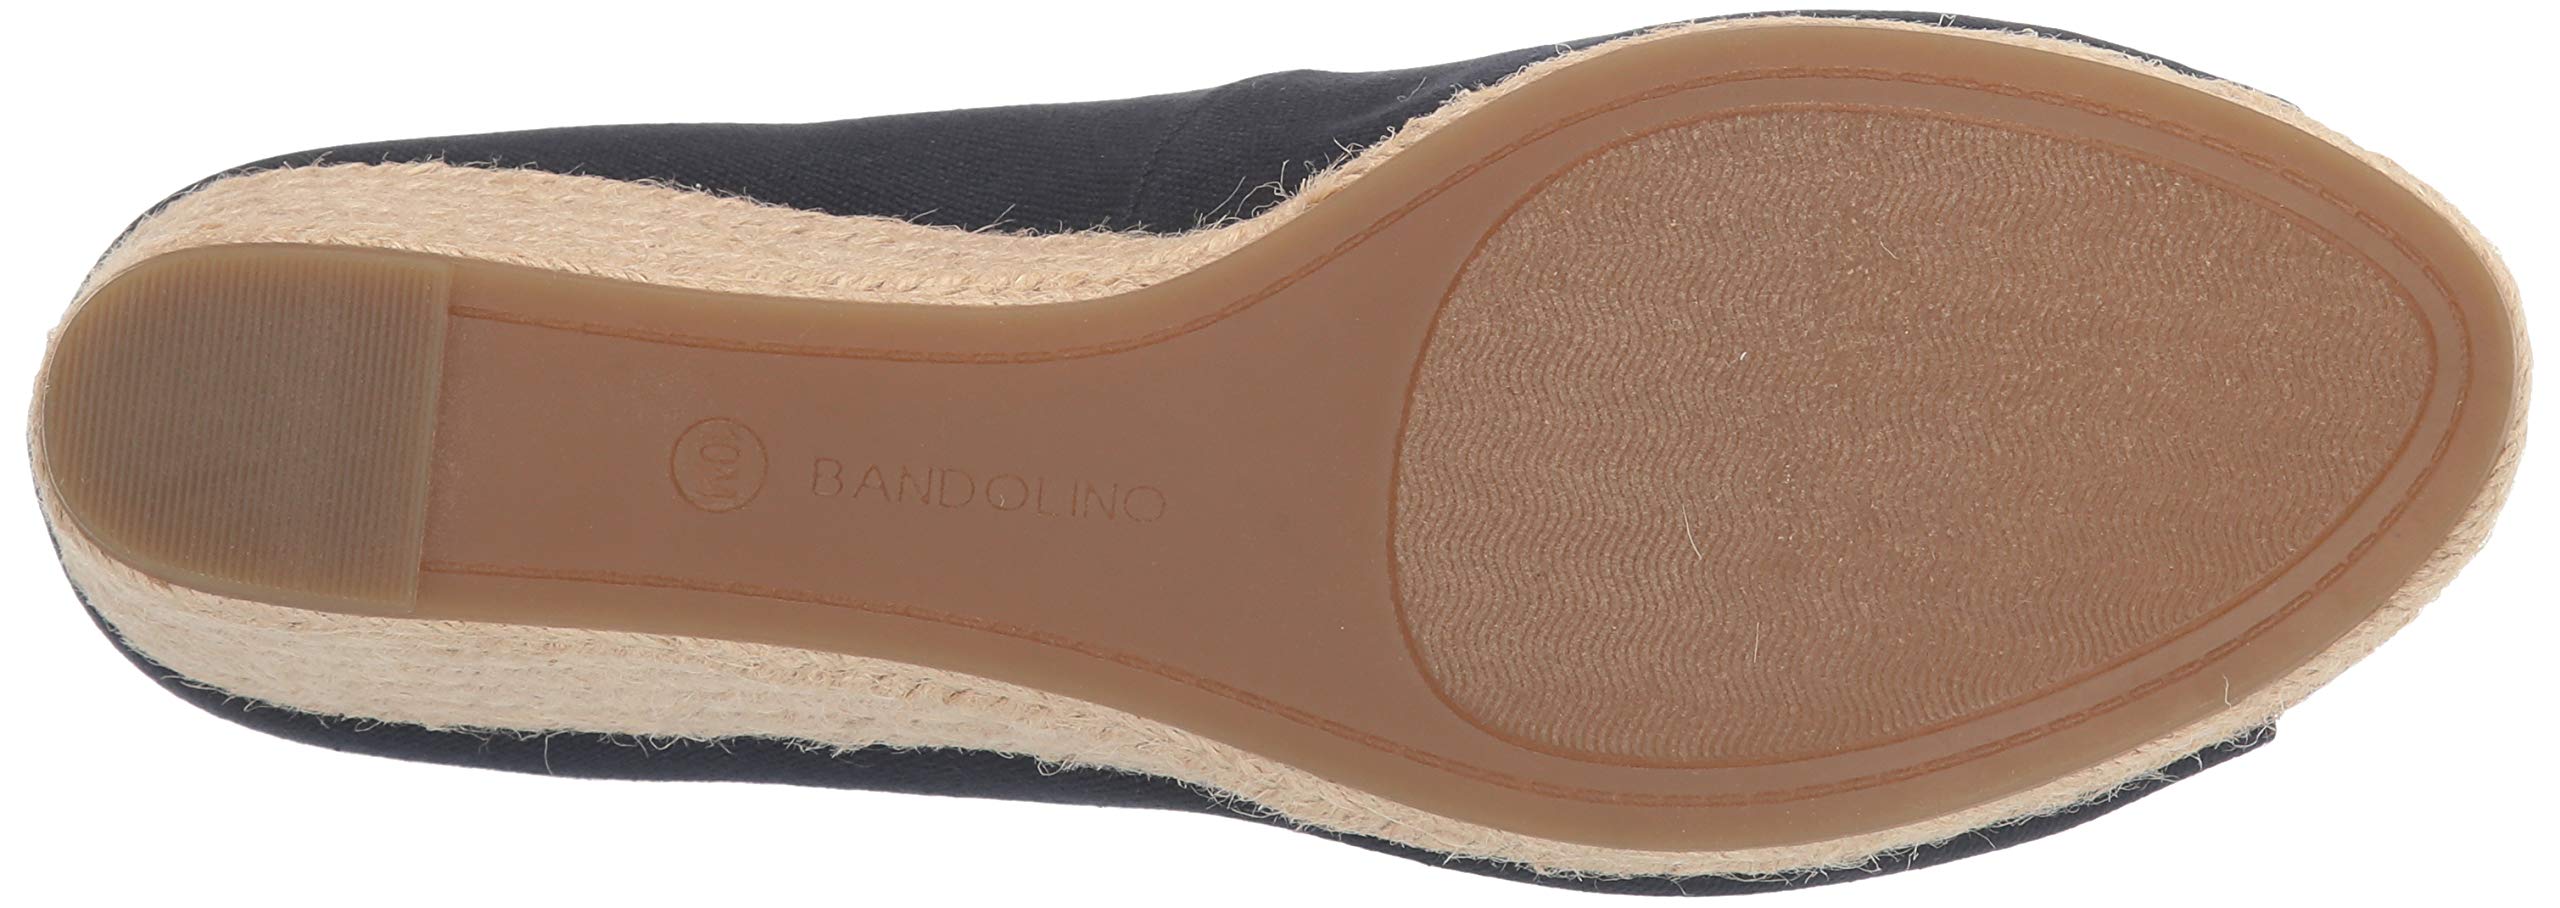 Bandolino Women's Nuri Wedge Sandal